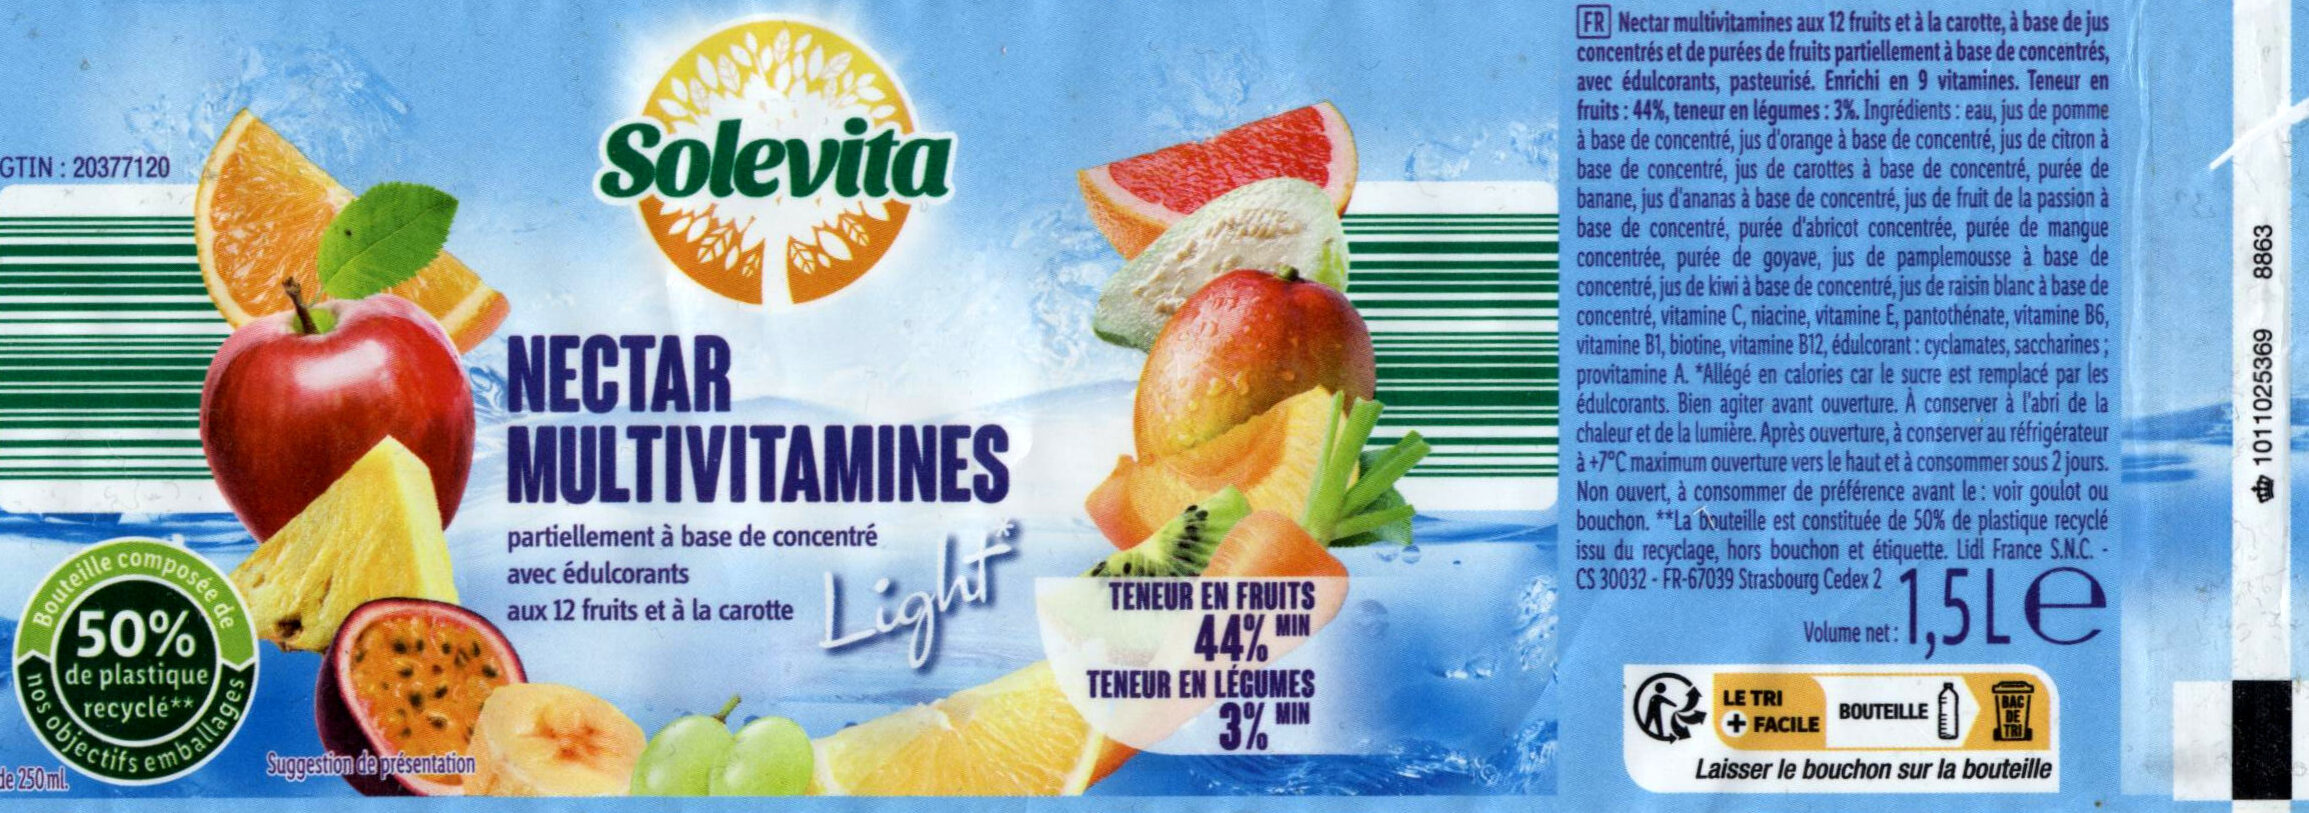 Nectar Multivitamines - Light - Ingredients - fr